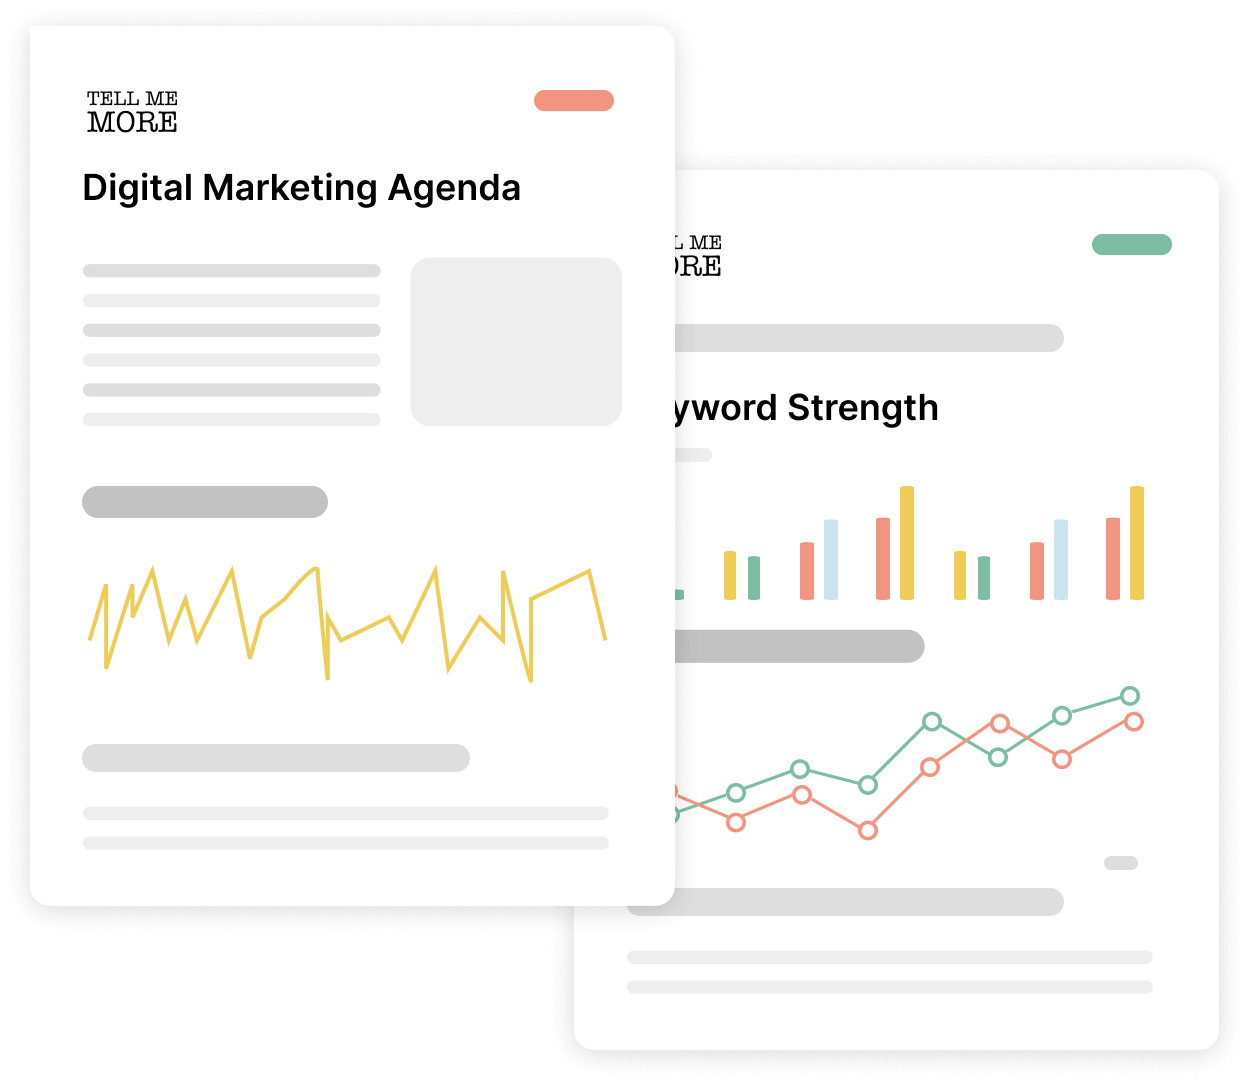 TMM digital marketing agenda illustration